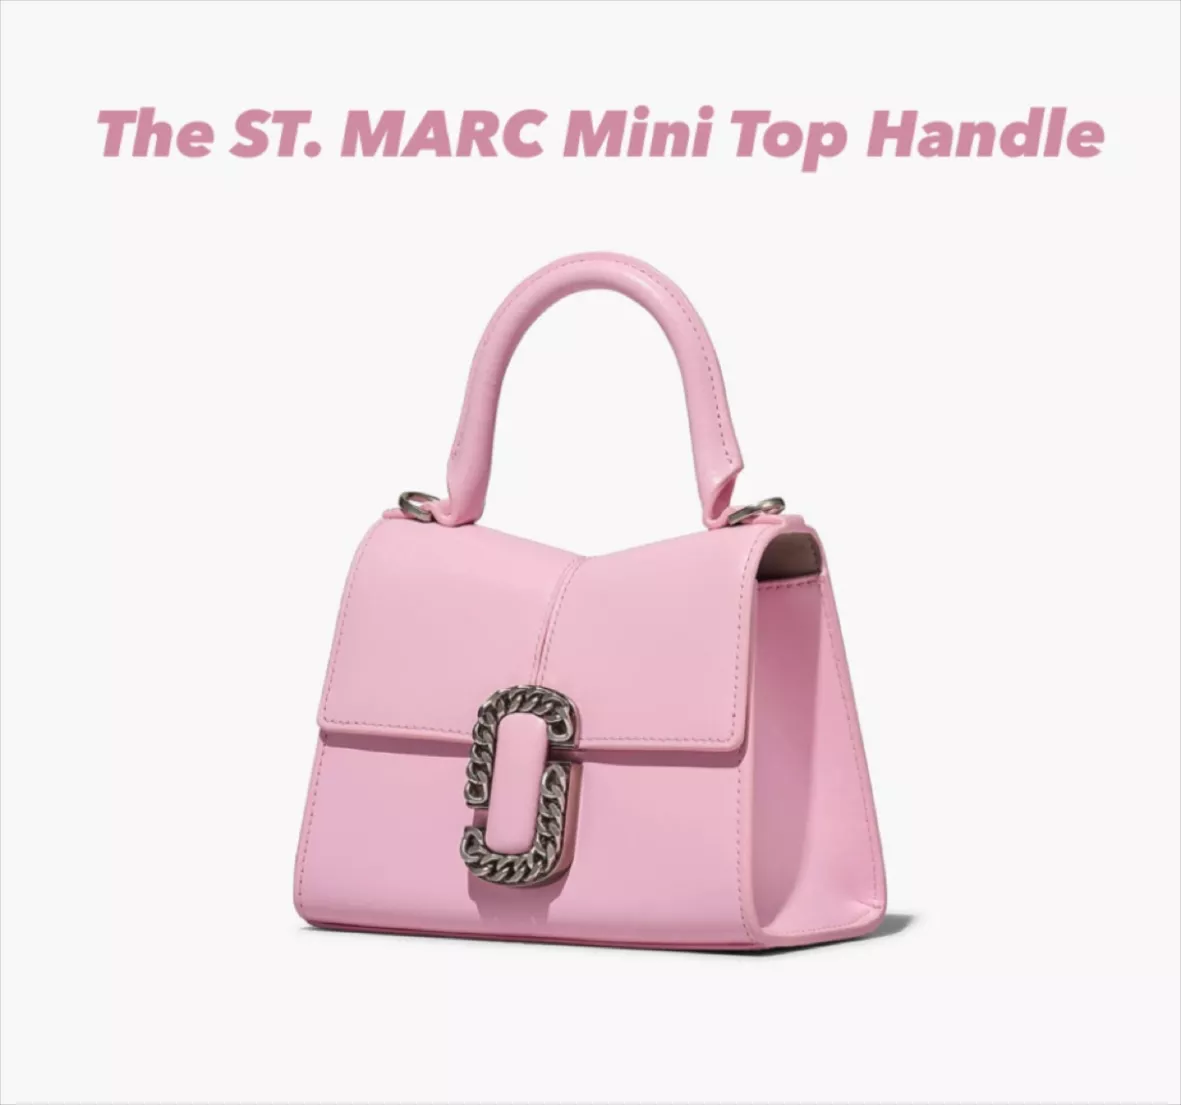 The St. Marc Mini Top Handle, Marc Jacobs